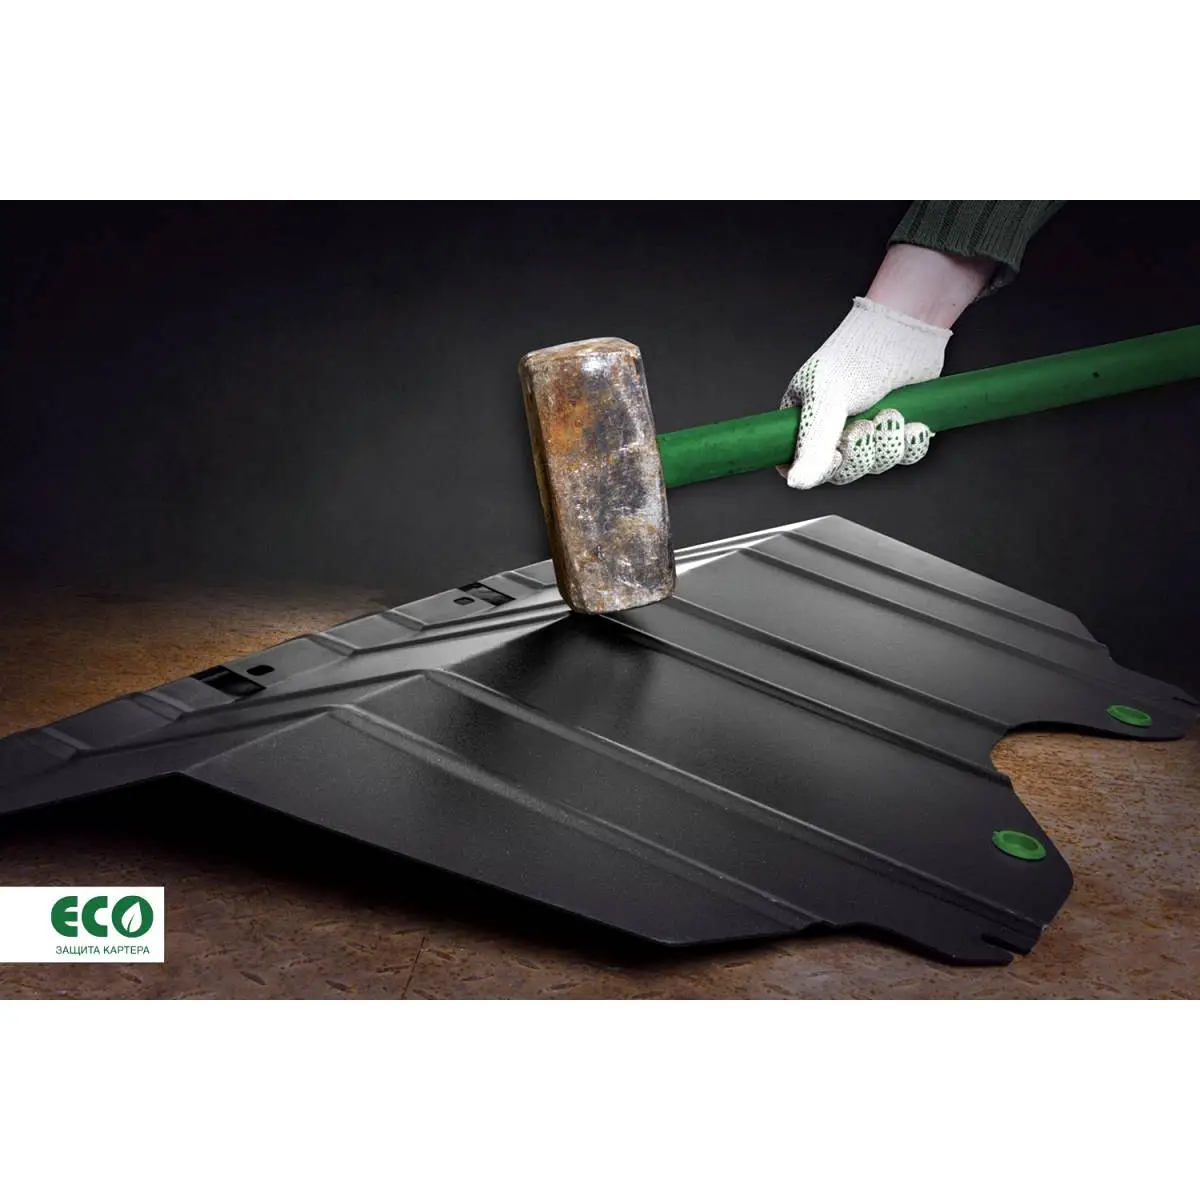 Комплект защиты картера и крепеж Eco 1437099105 5O6 9E eco2036020 XQ5OLR изображение 3